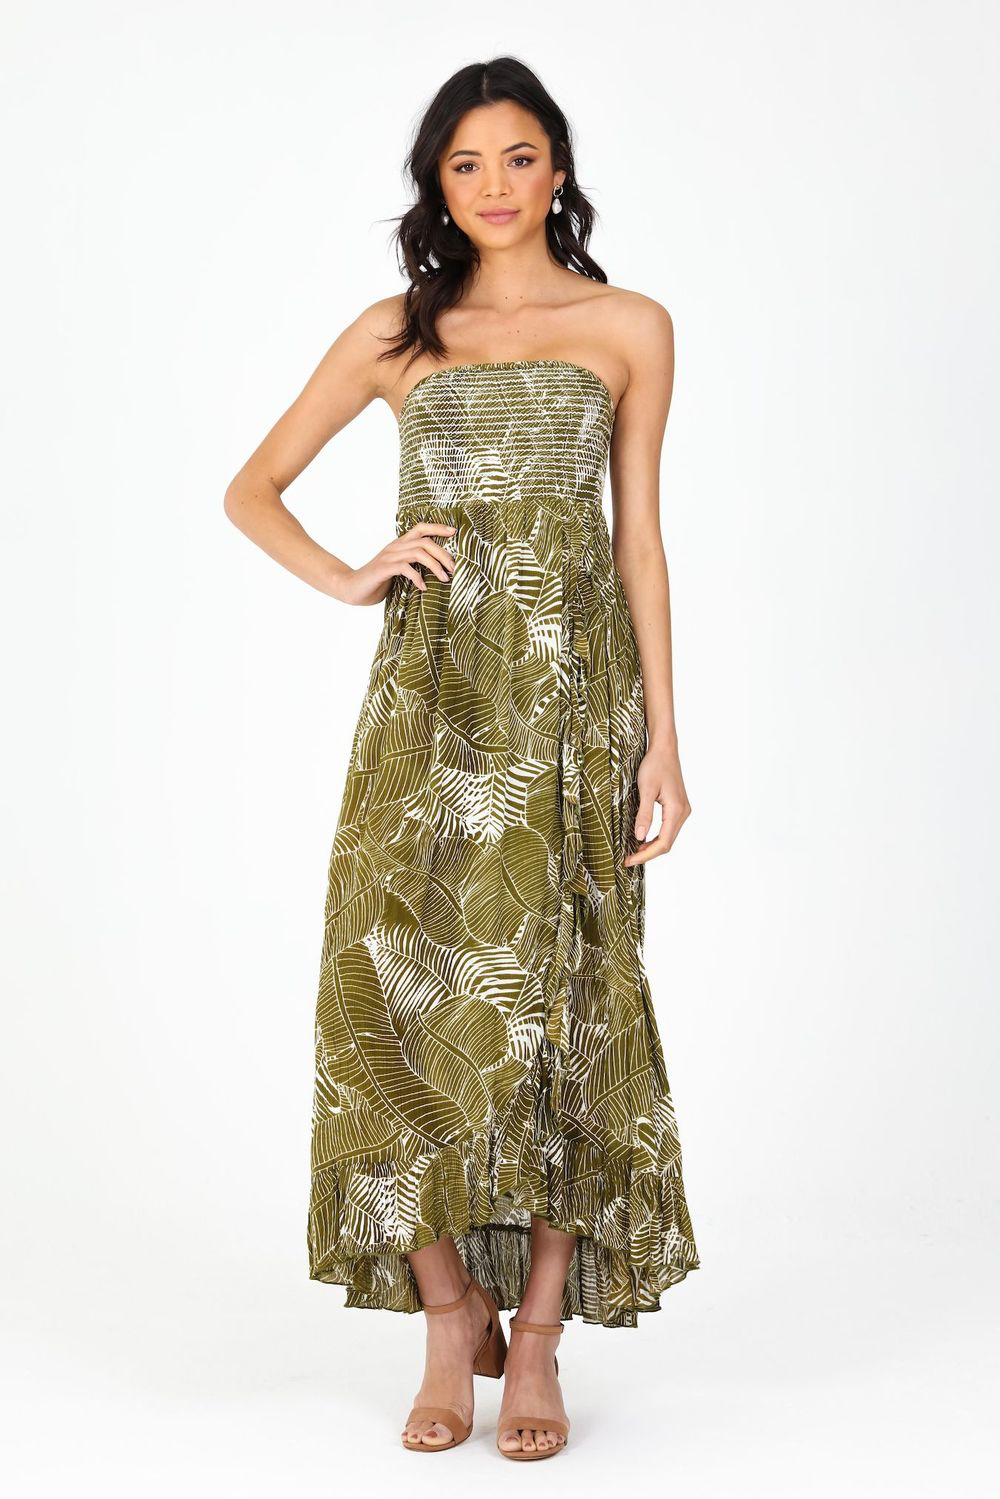 Modesto Dress - Leaf - Kingfisher Road - Online Boutique